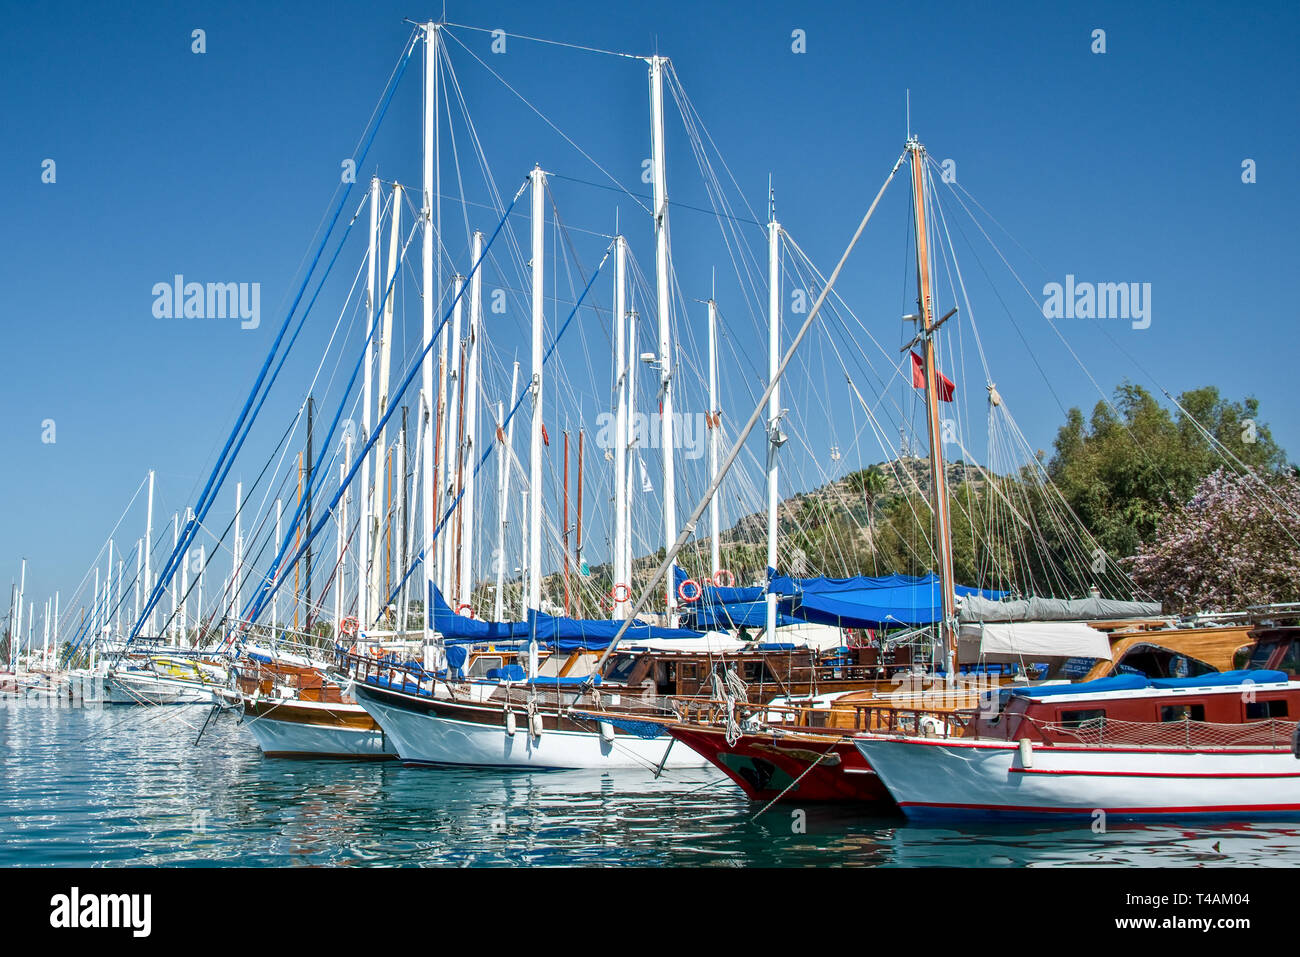 Sailboats in the harbor of Kos, Dodecanese island, Greece Stock Photo